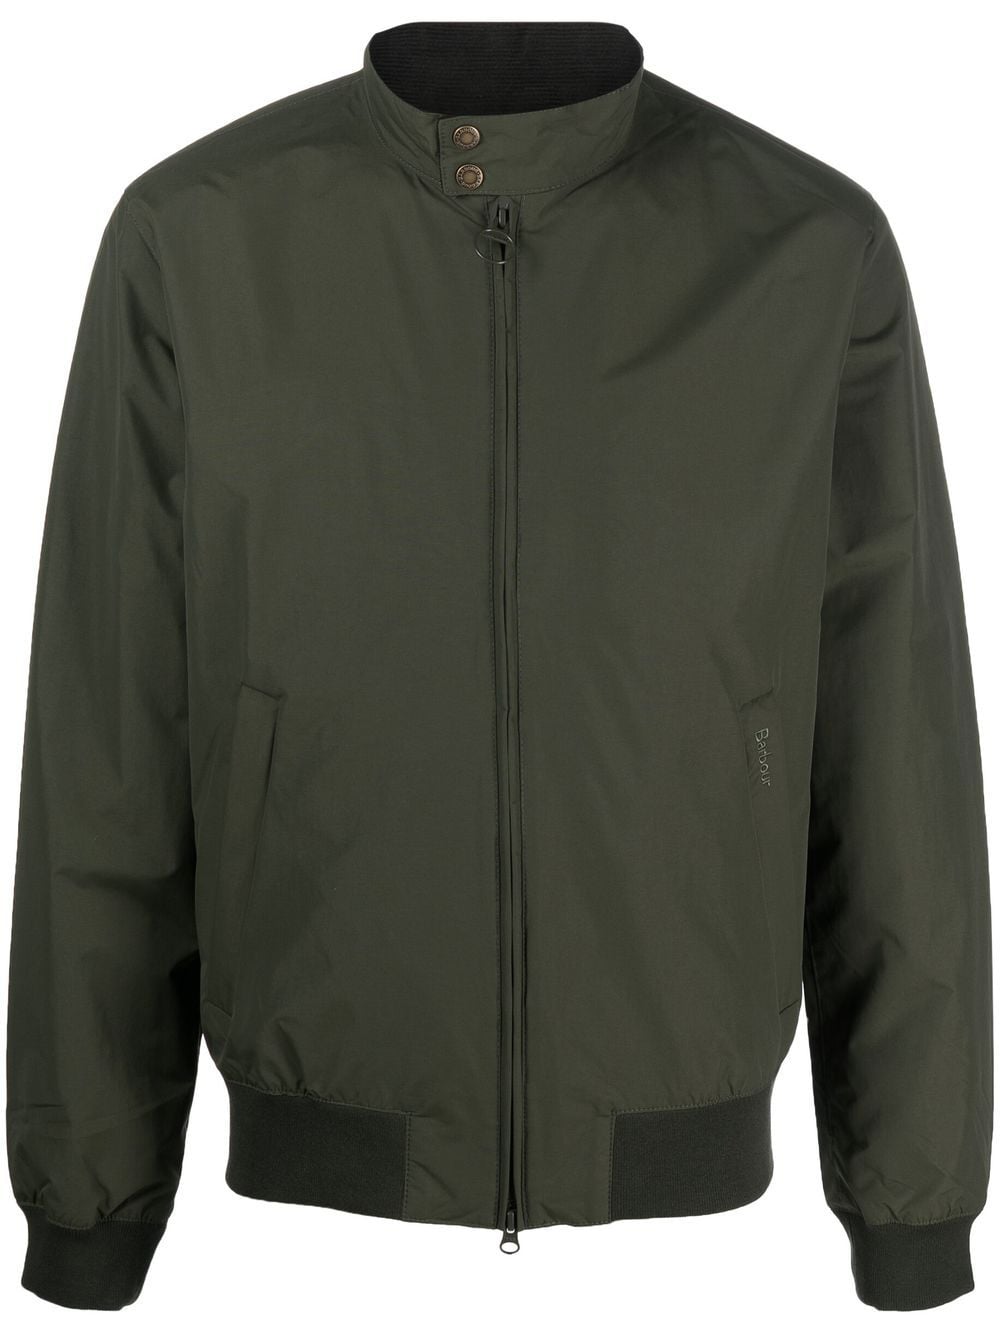 Barbour lightweight bomber jacket - Green von Barbour